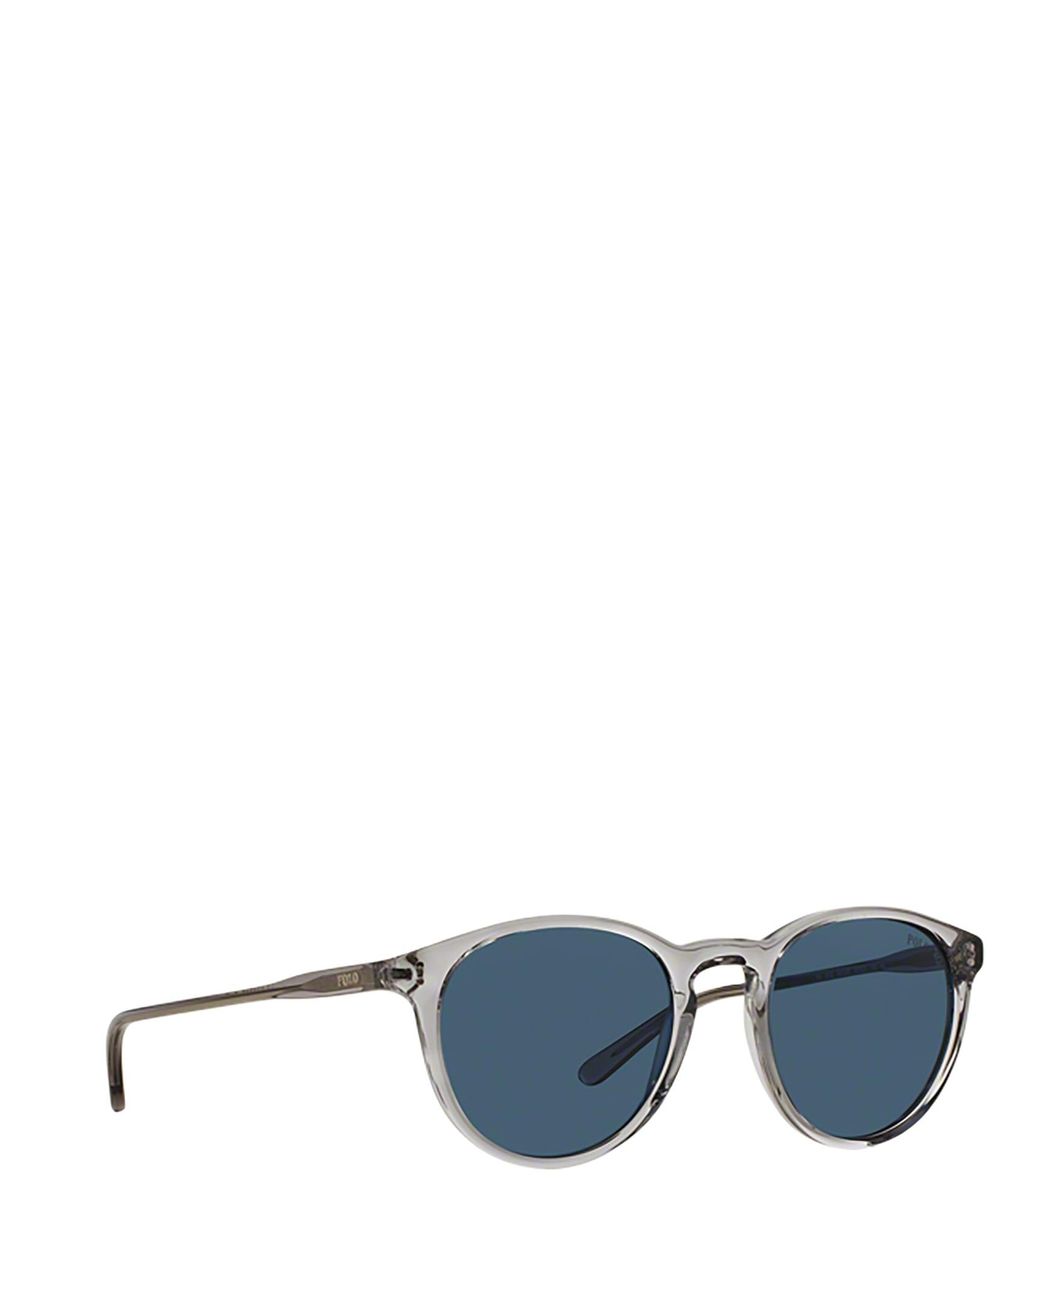 polo ralph lauren SHINY SEMI TRANSPARENT GREY Ph4110 Shiny Semi transparent Grey Sunglasses